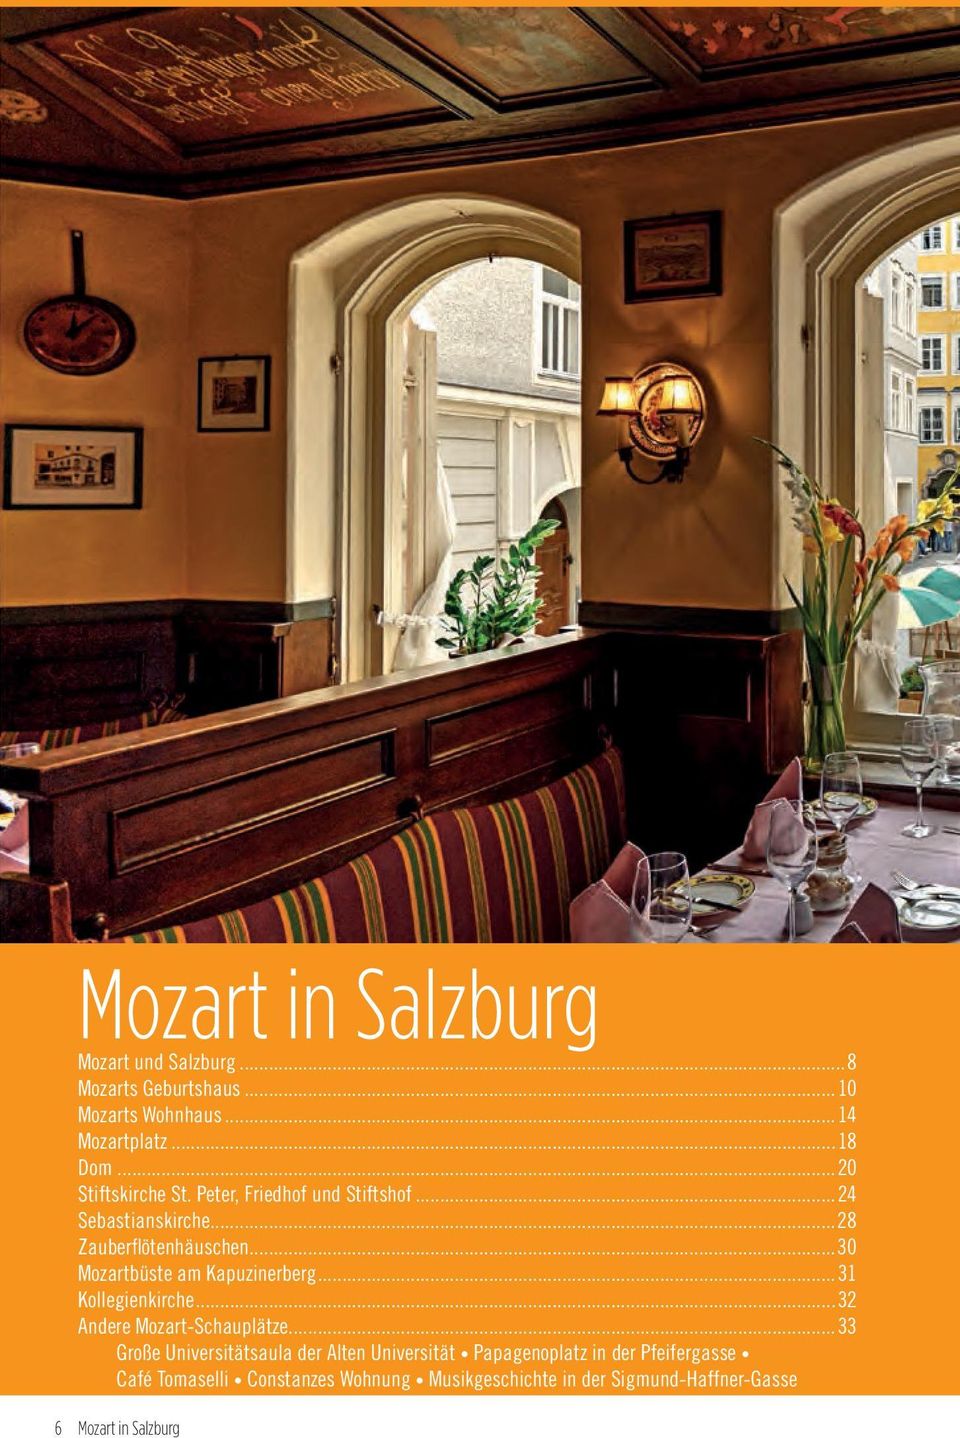 ..30 Mozartbüste am Kapuzinerberg...31 Kollegienkirche...32 Andere Mozart-Schauplätze.